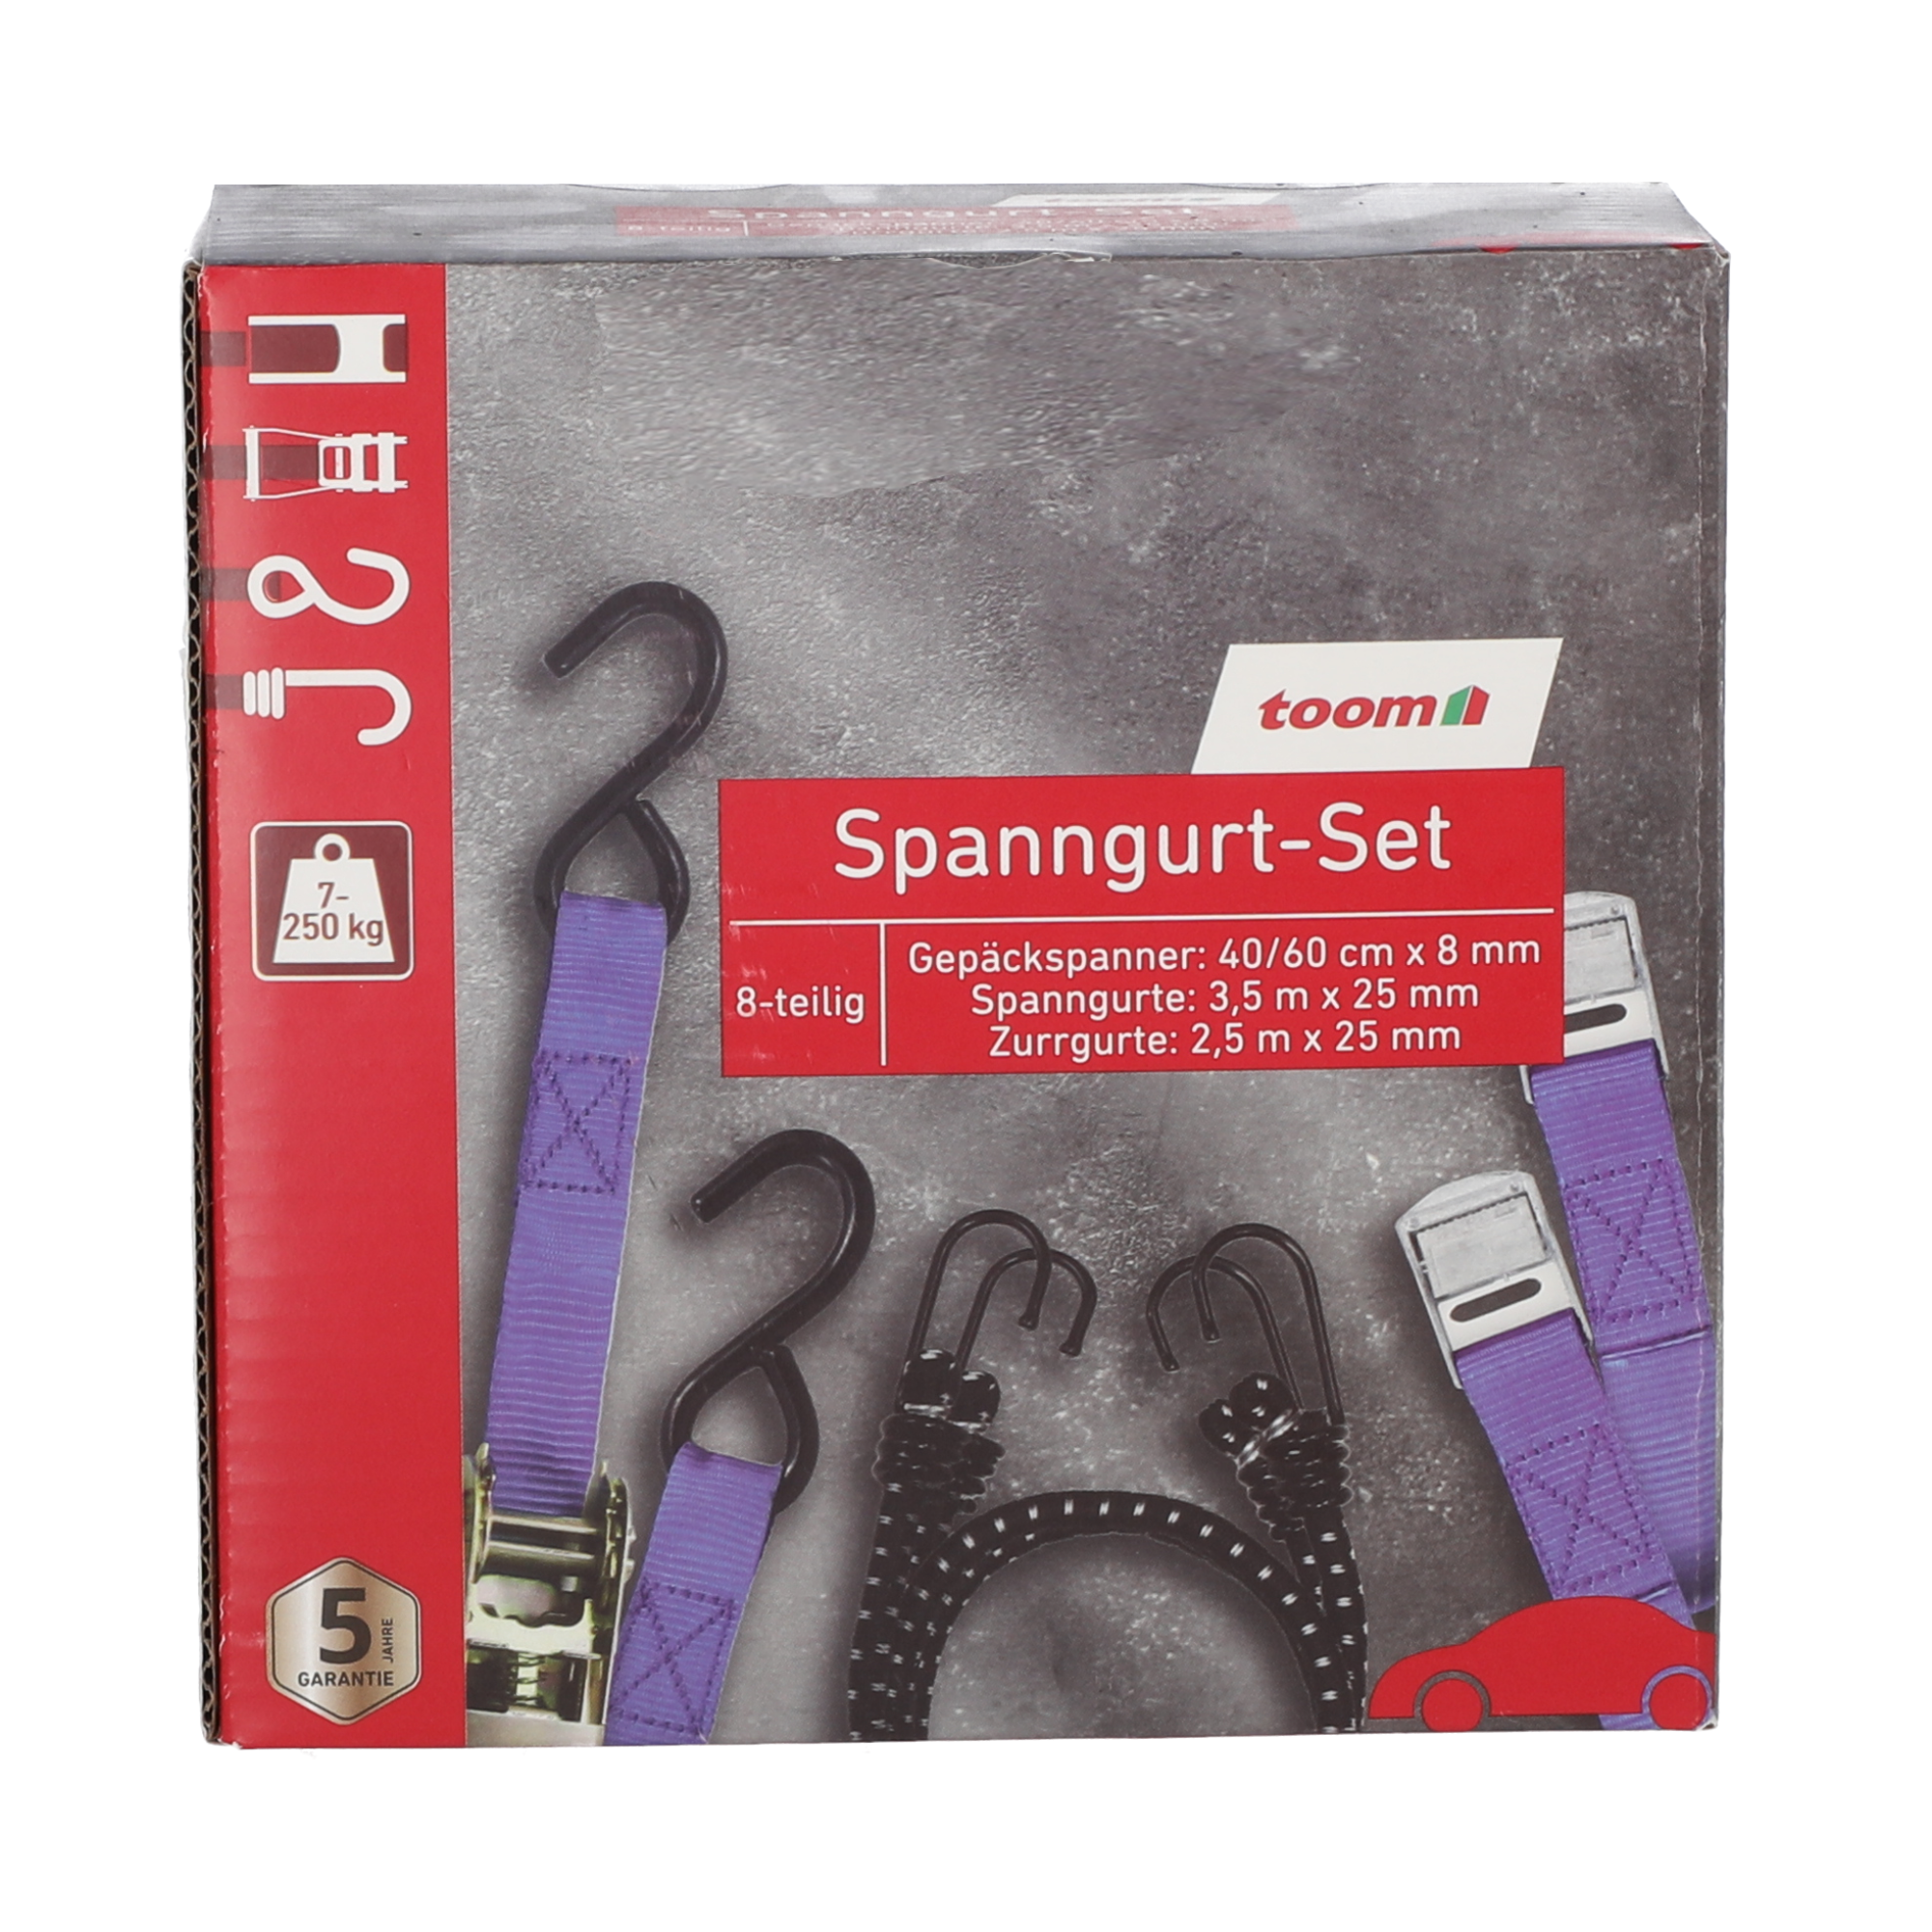 Spanngurt-Set 8-teilig + product picture